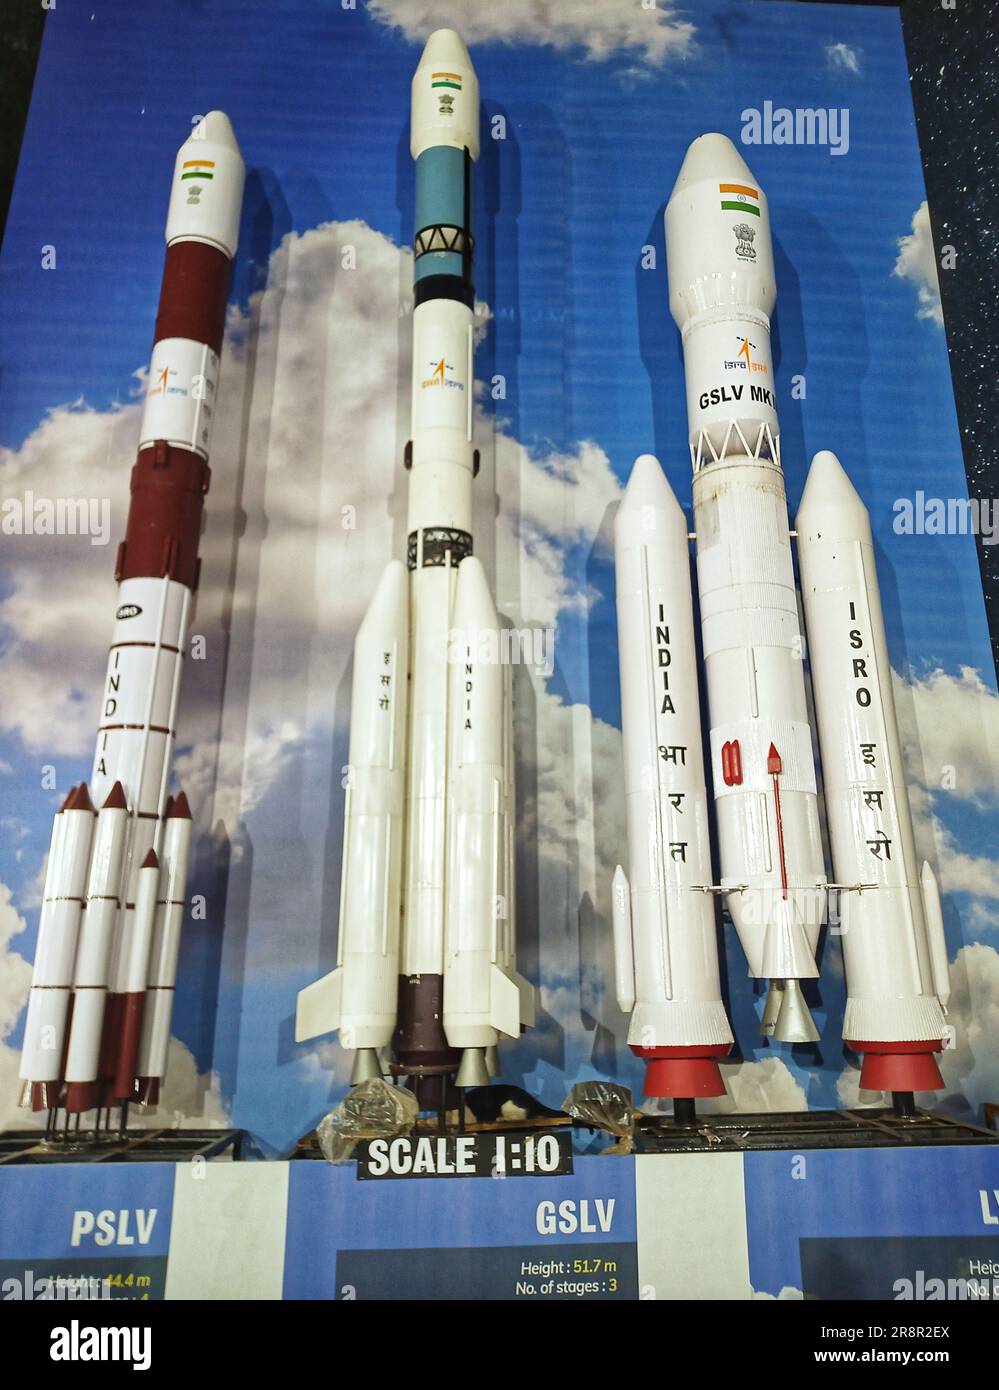 isro,indian rockets,ISRO Indian Space Research Organization Satellite Launch Vehicle Rocket Model,pslv,gslv,indian space research,space technology Stock Photo